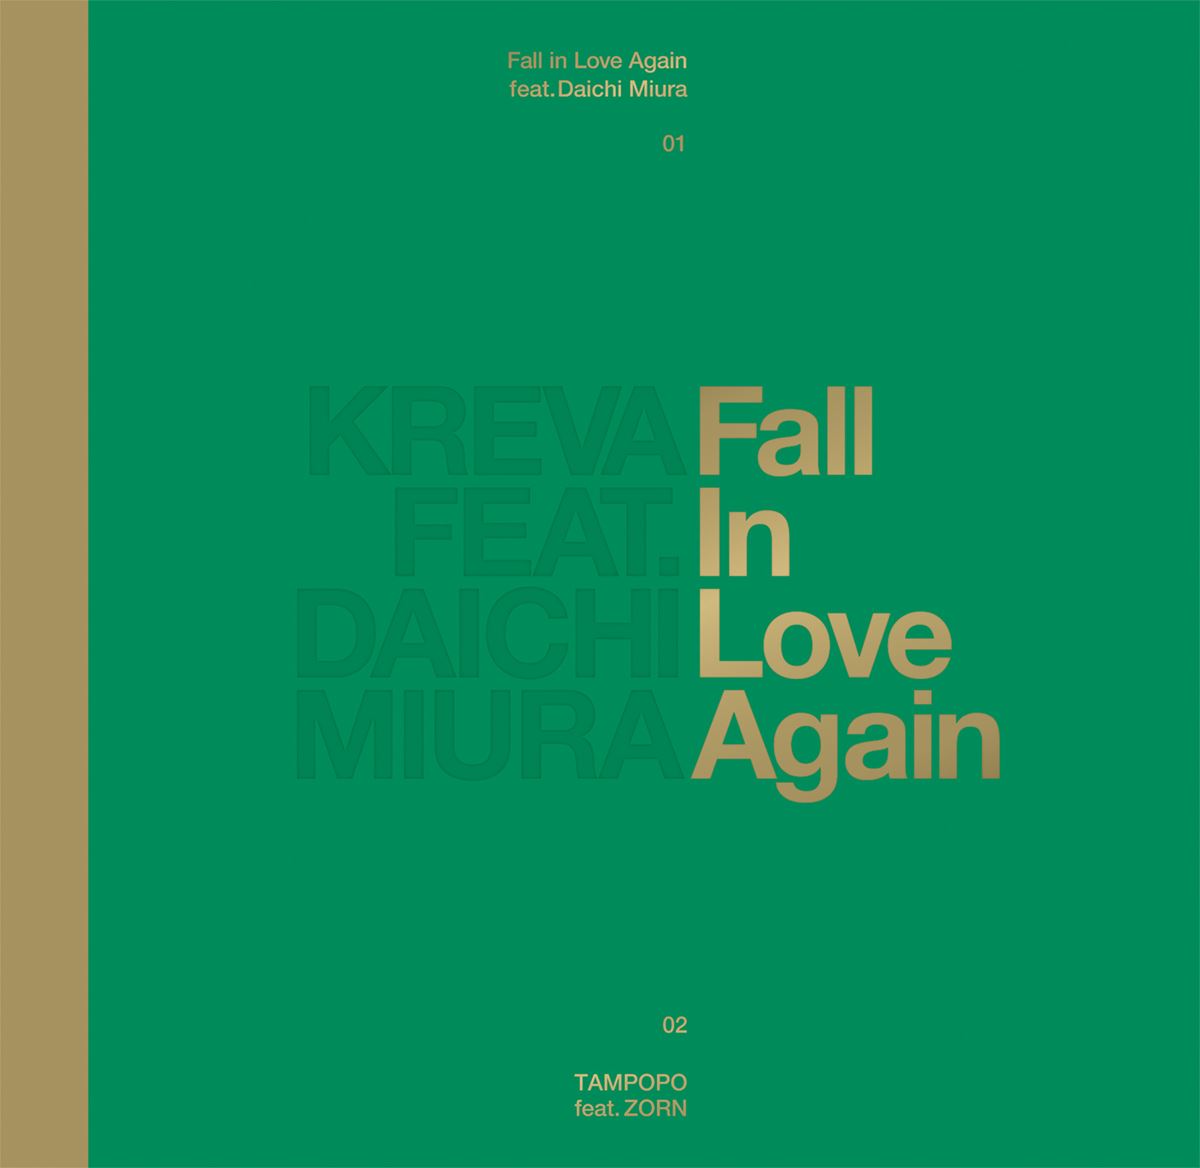 「Fall in Love Again feat. 三浦大知」ジャケット